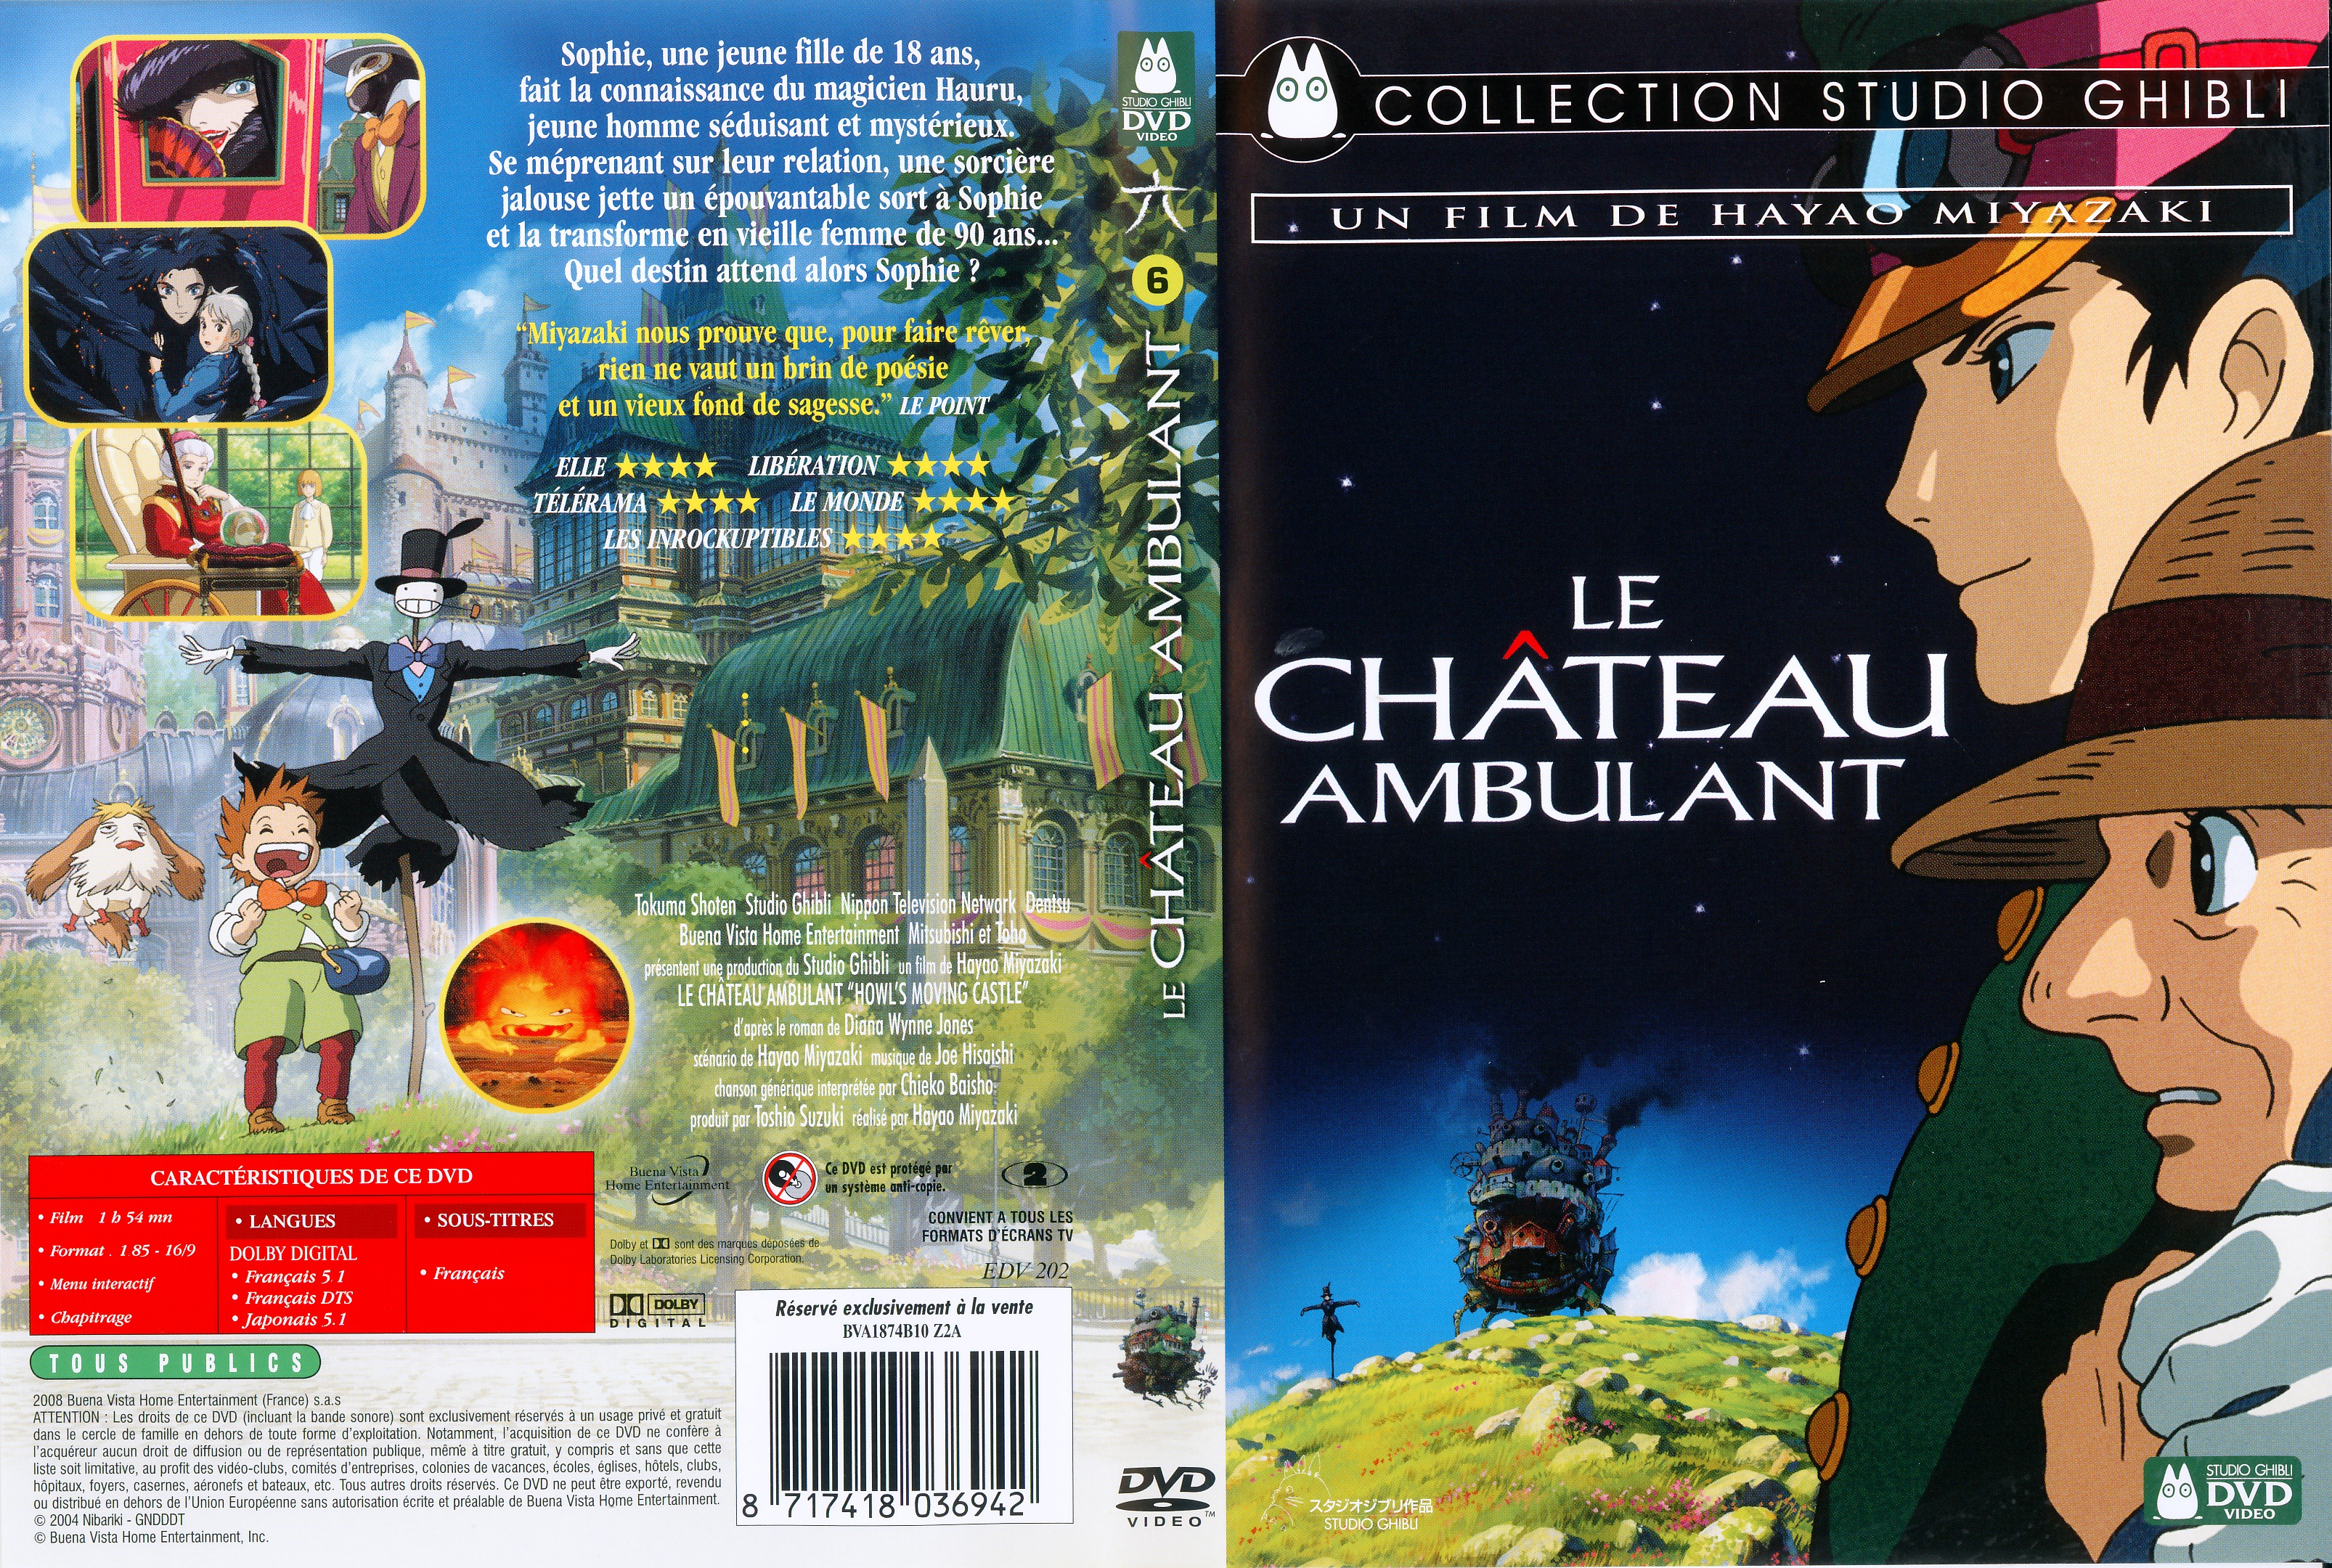 Jaquette DVD Le chateau ambulant v3